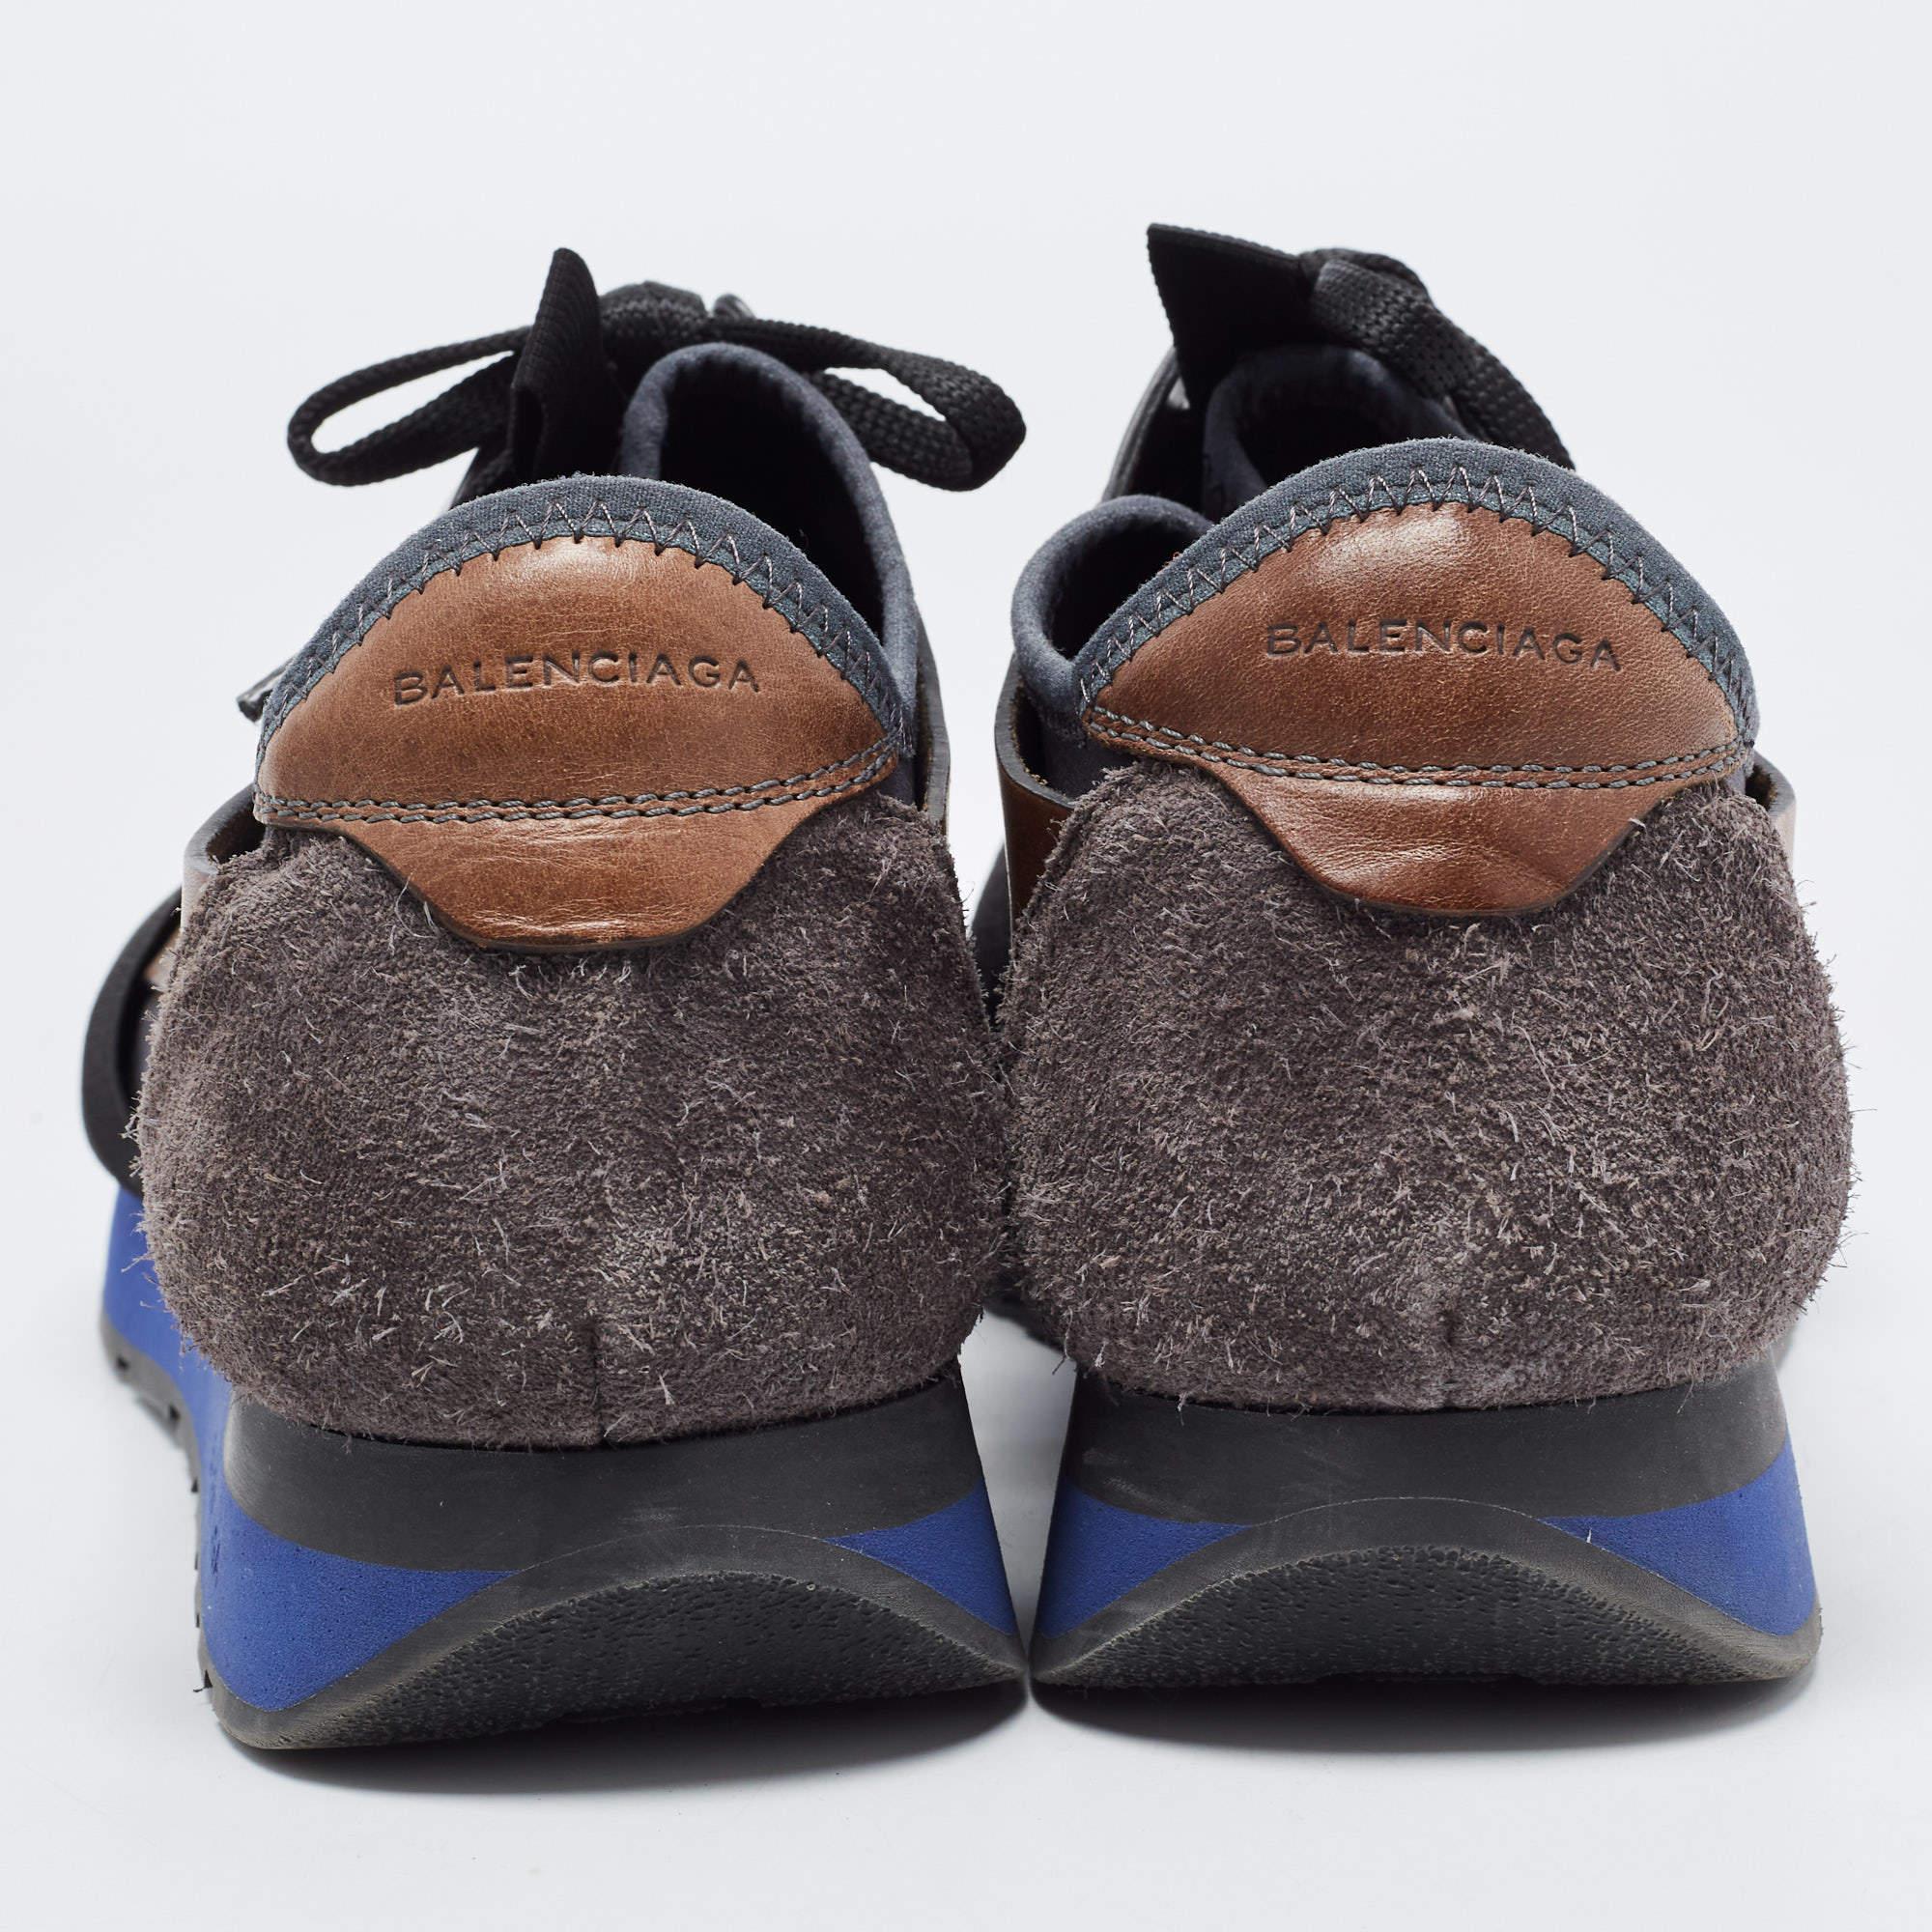 Balenciaga Multicolor Leather and Mesh Race Runner Sneakers Size 40 In Good Condition For Sale In Dubai, Al Qouz 2